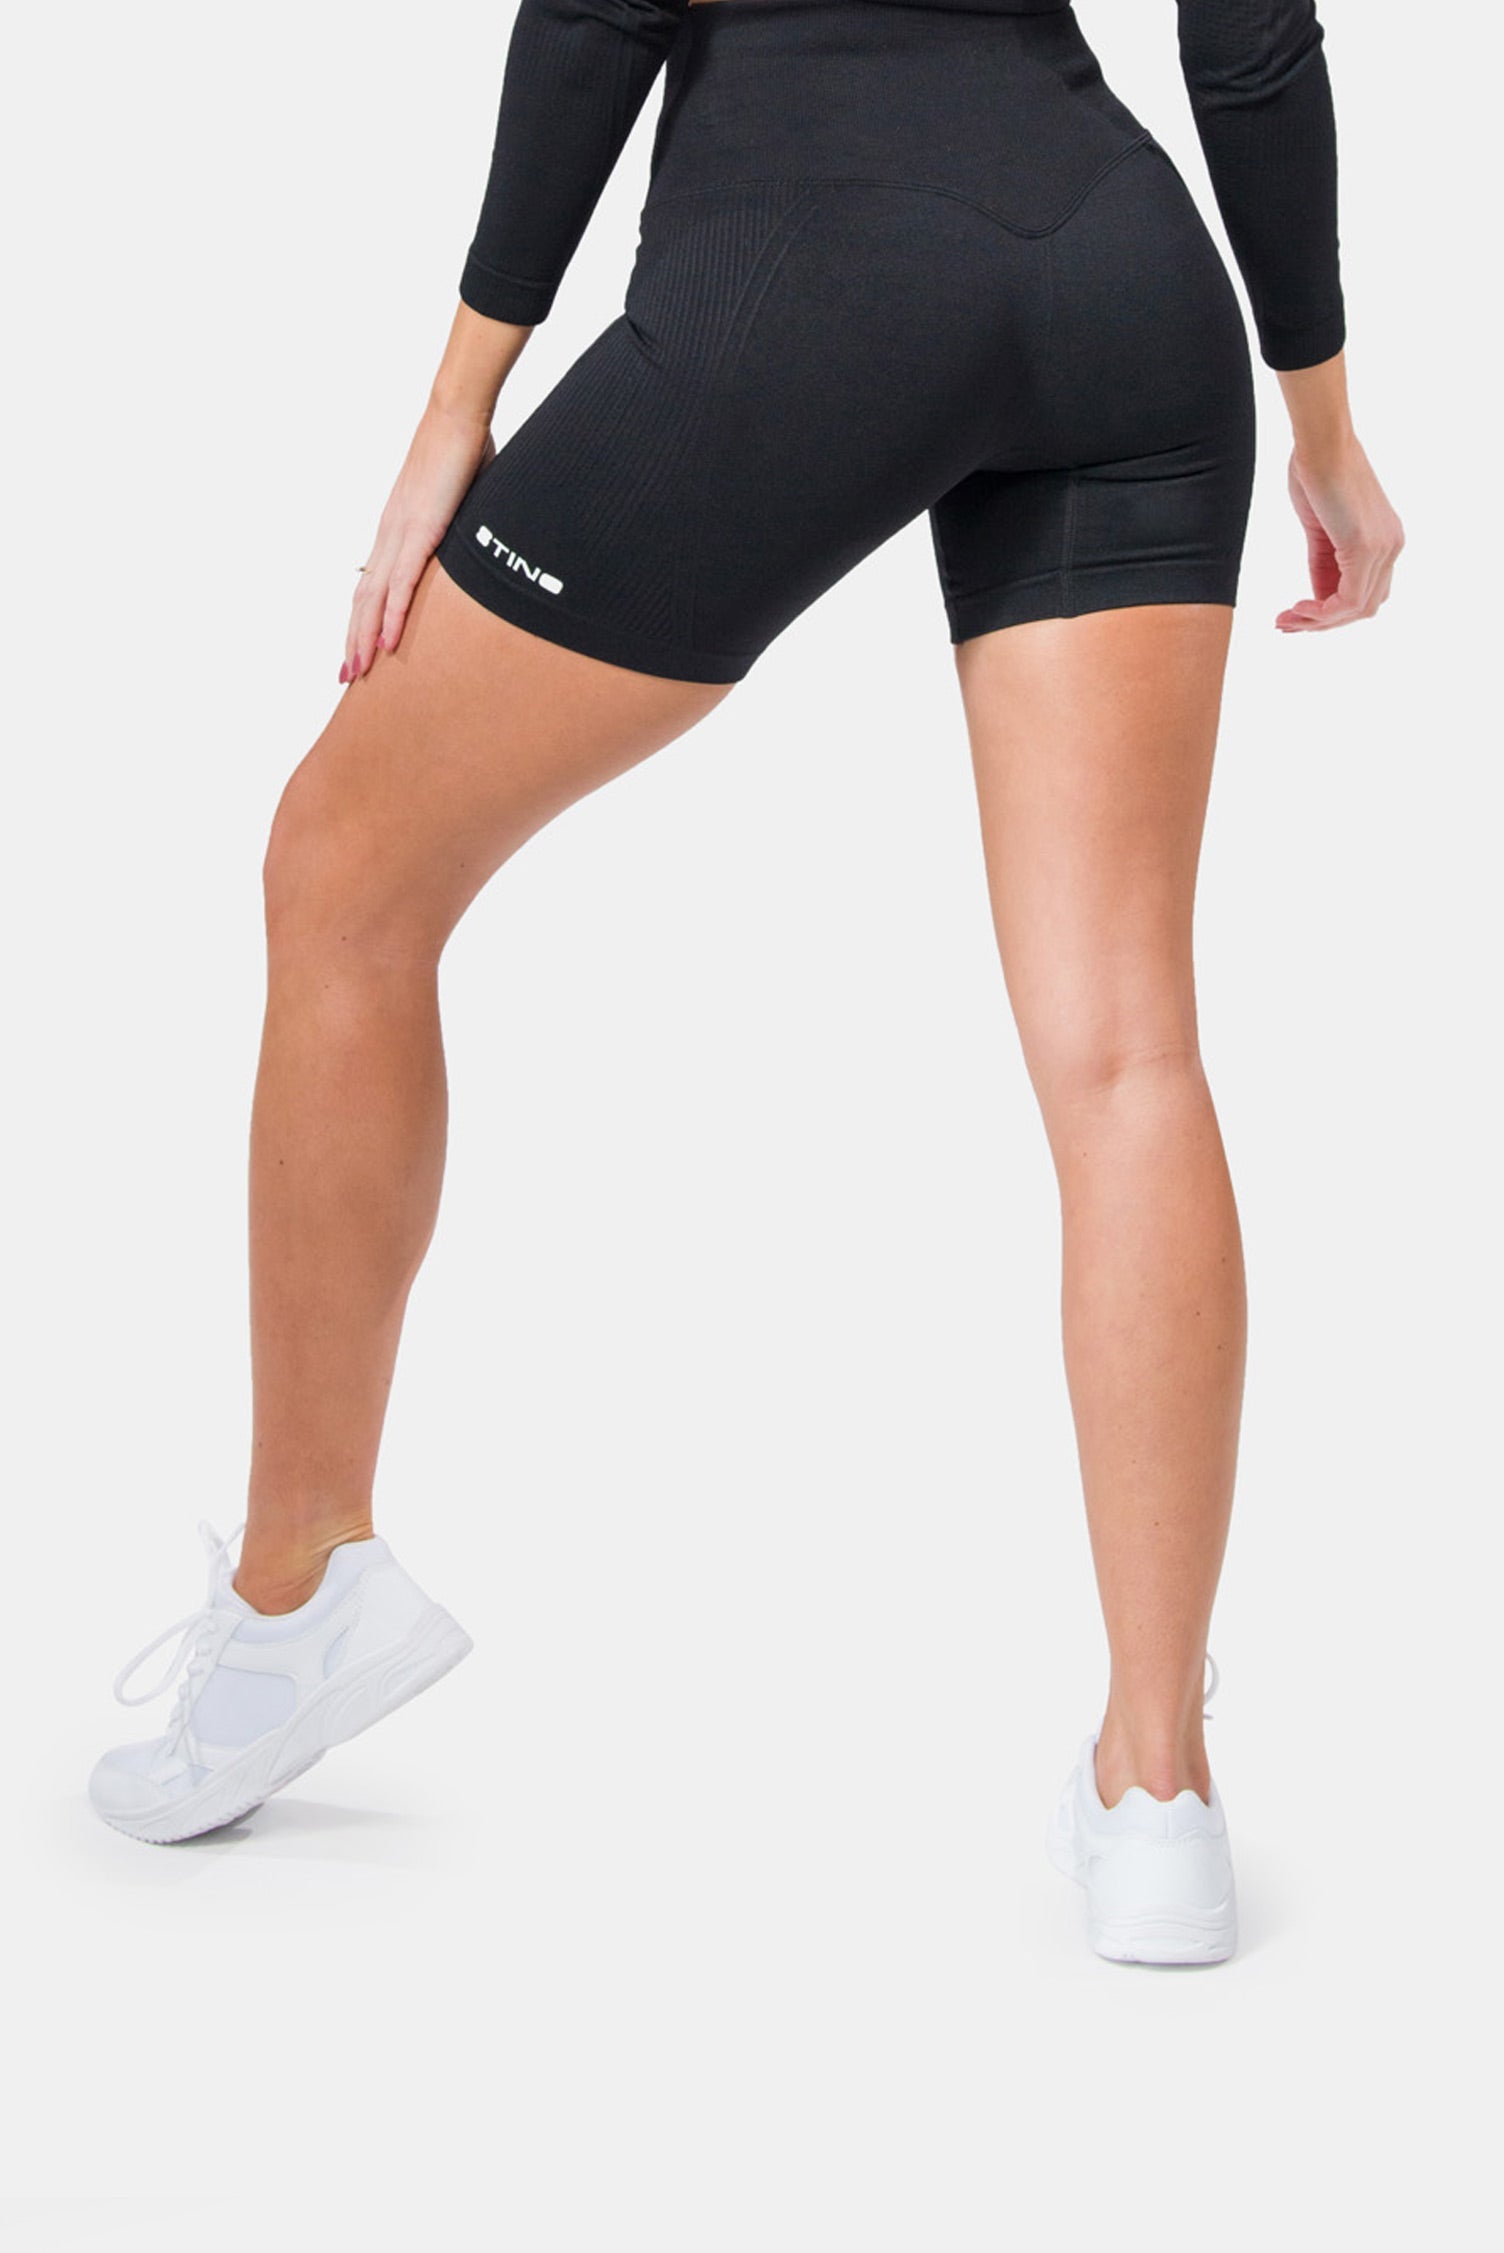 Shop Women's Bike Shorts, Gym Shorts & Workout Shorts